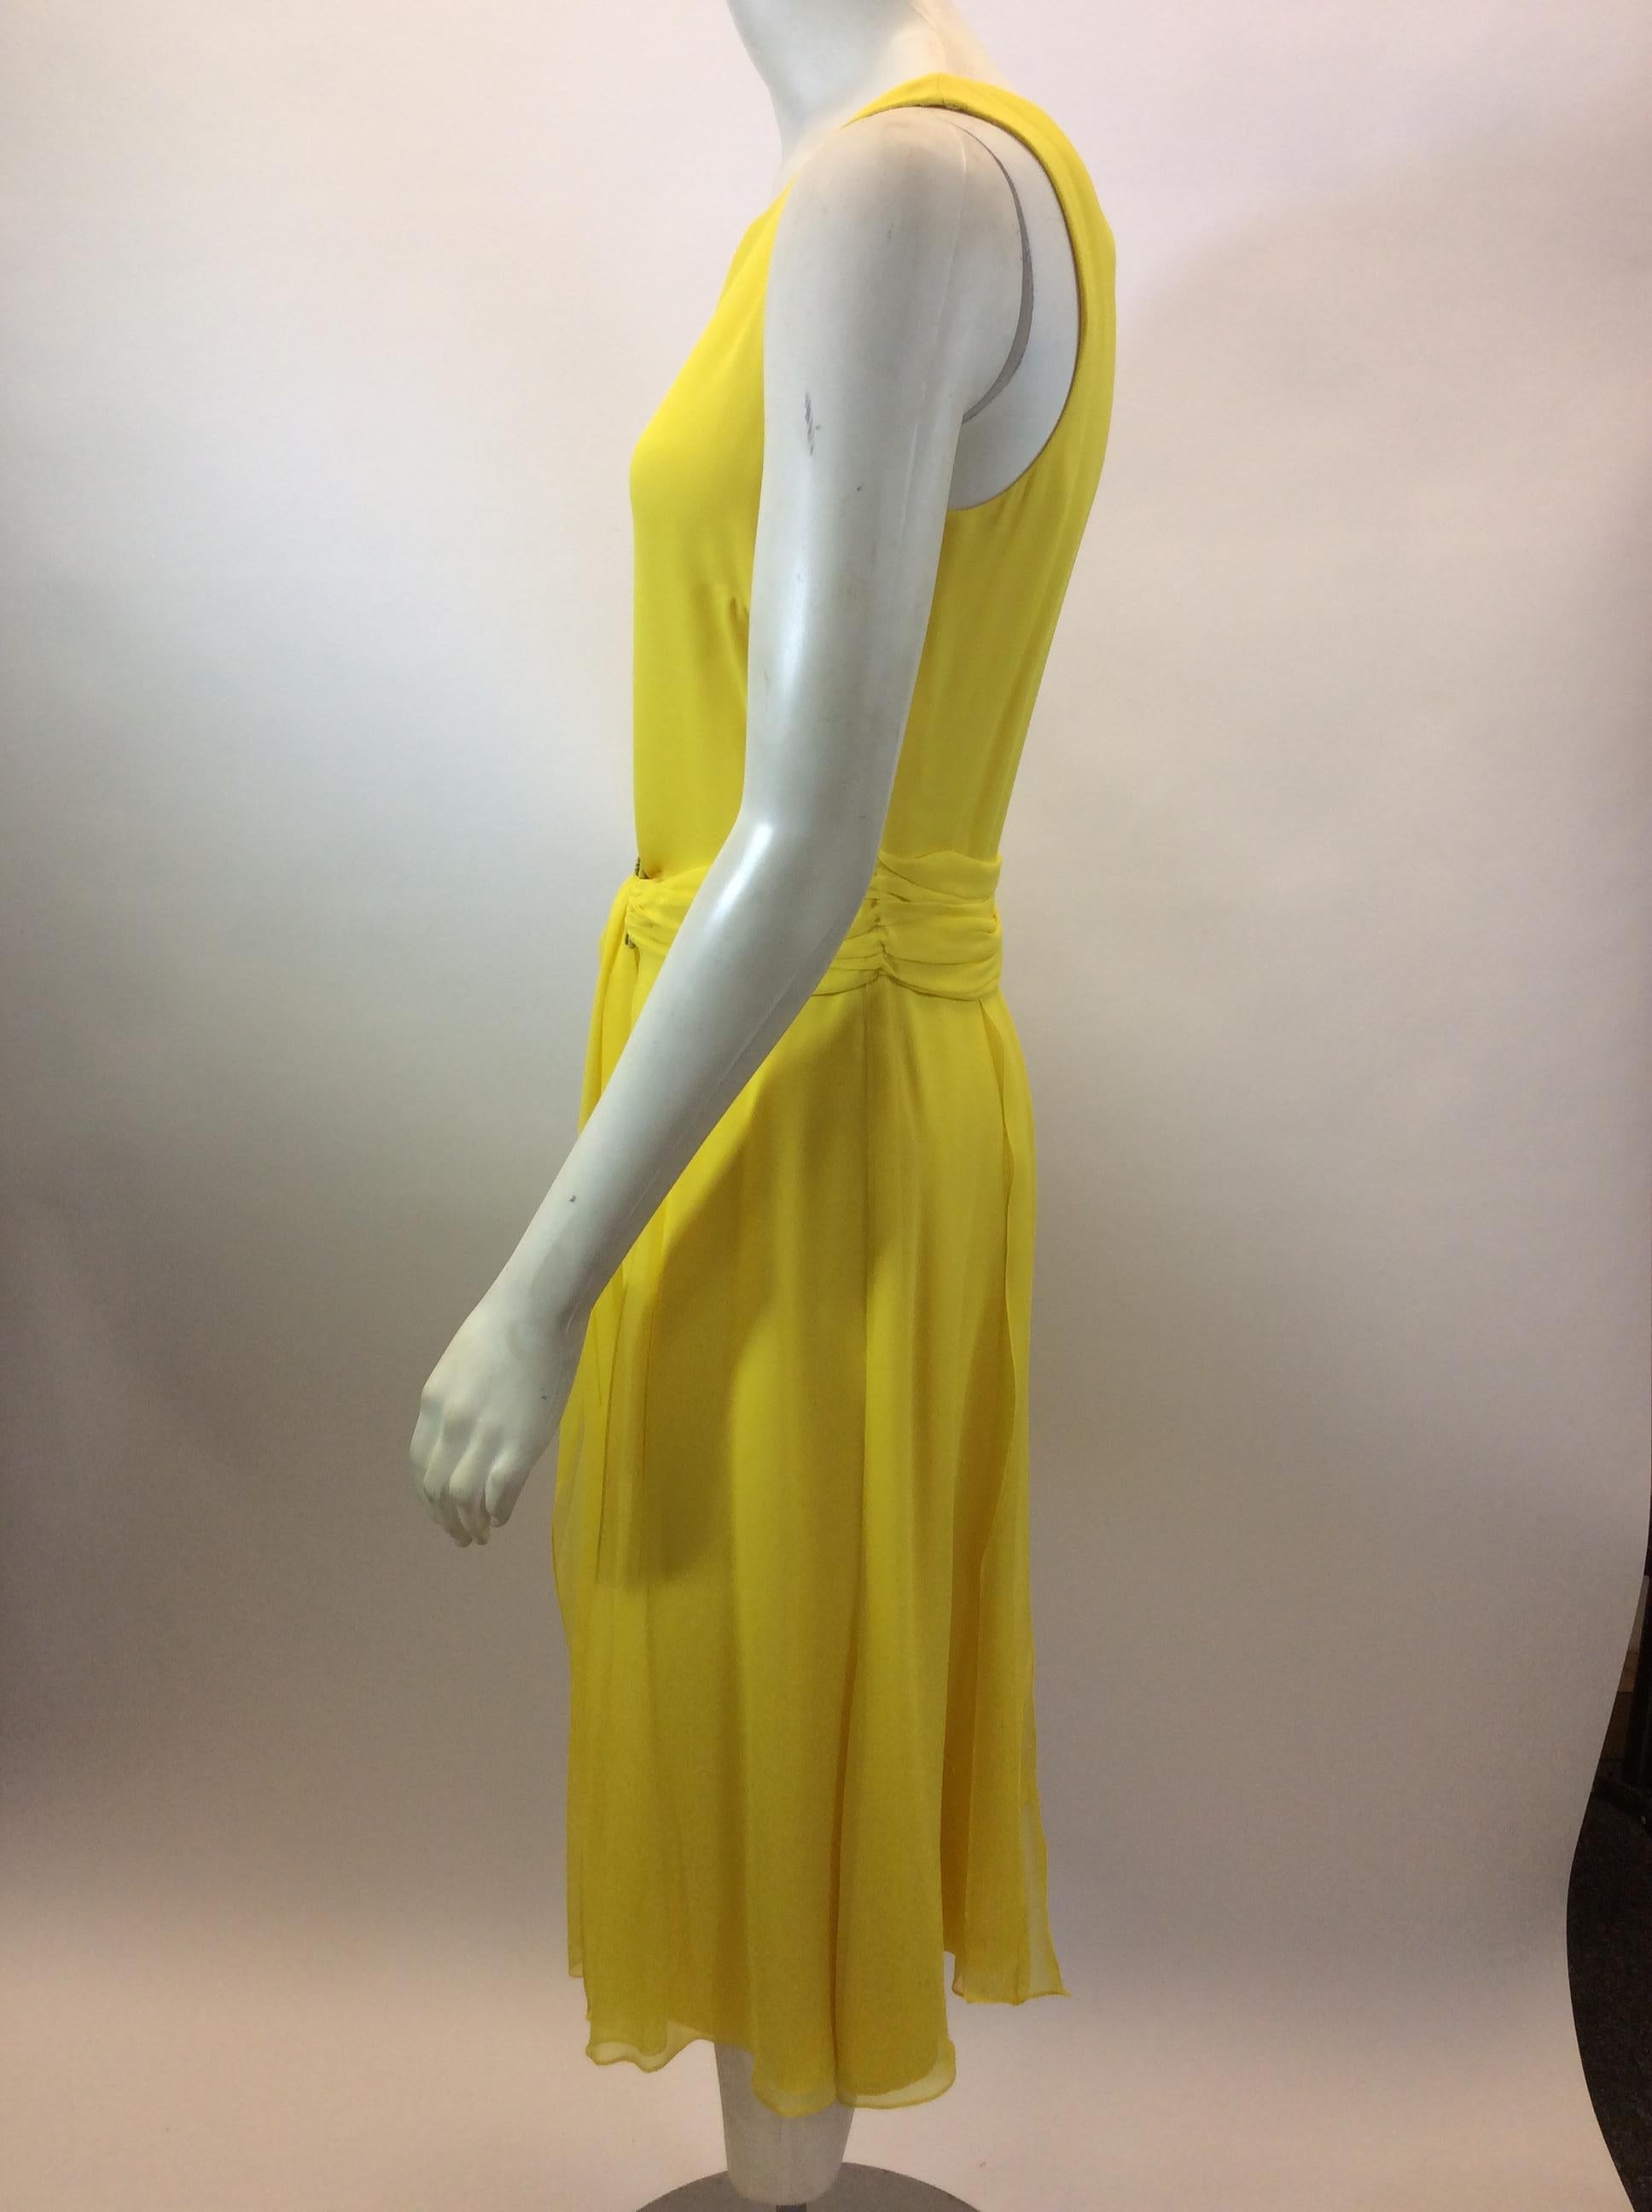 Carolina Herrera Yellow Silk Dress
$499
Made in the US
100% Silk
Size 8
Length 42